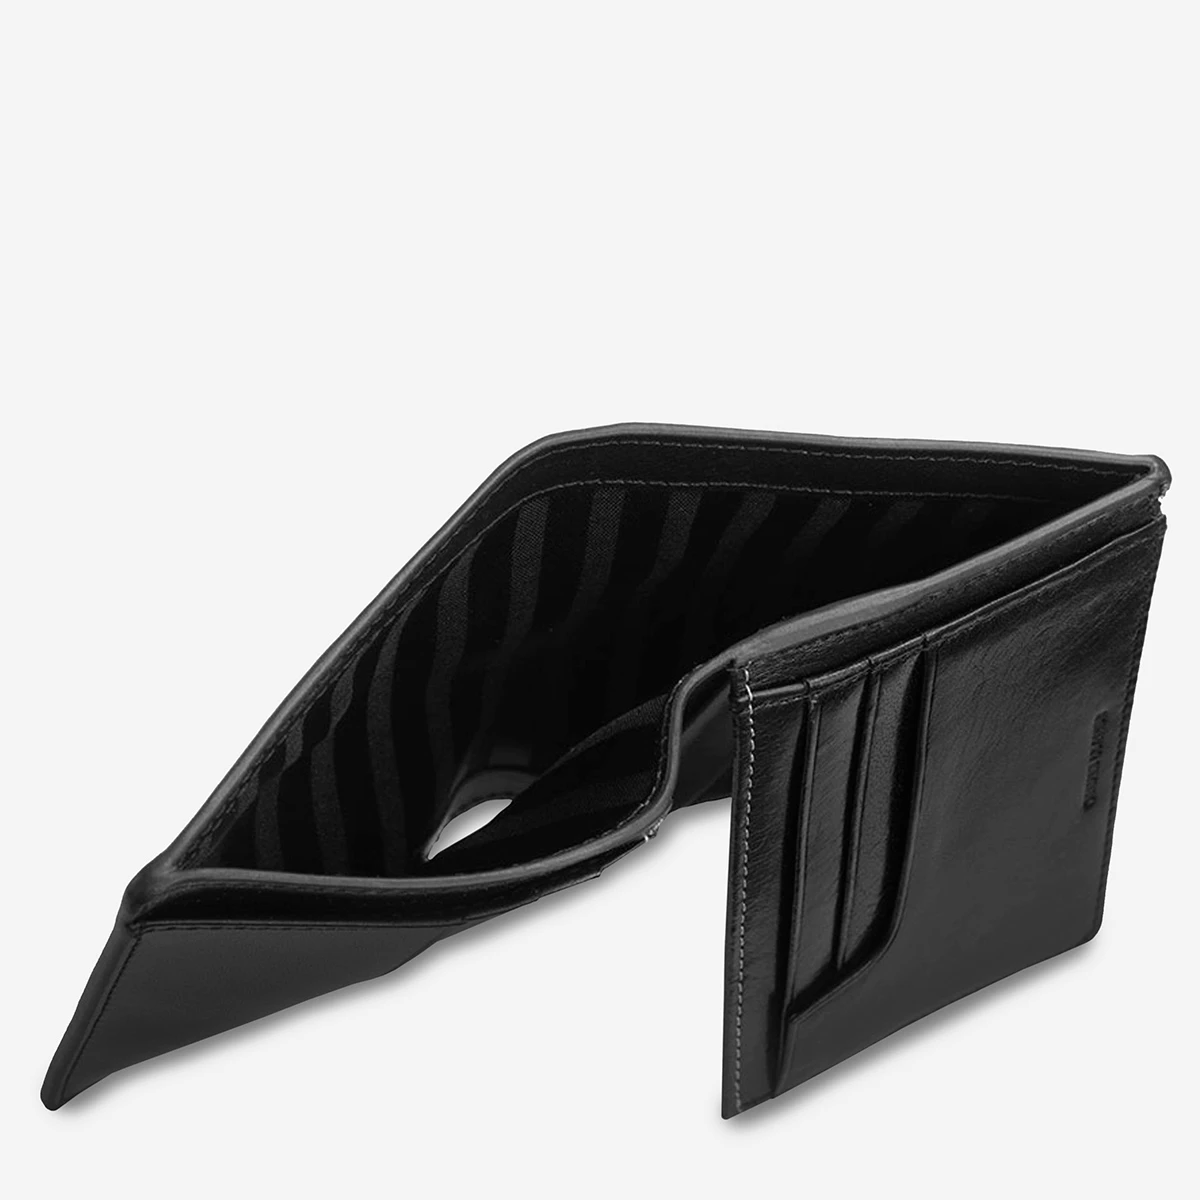 nathaniel wallet | black